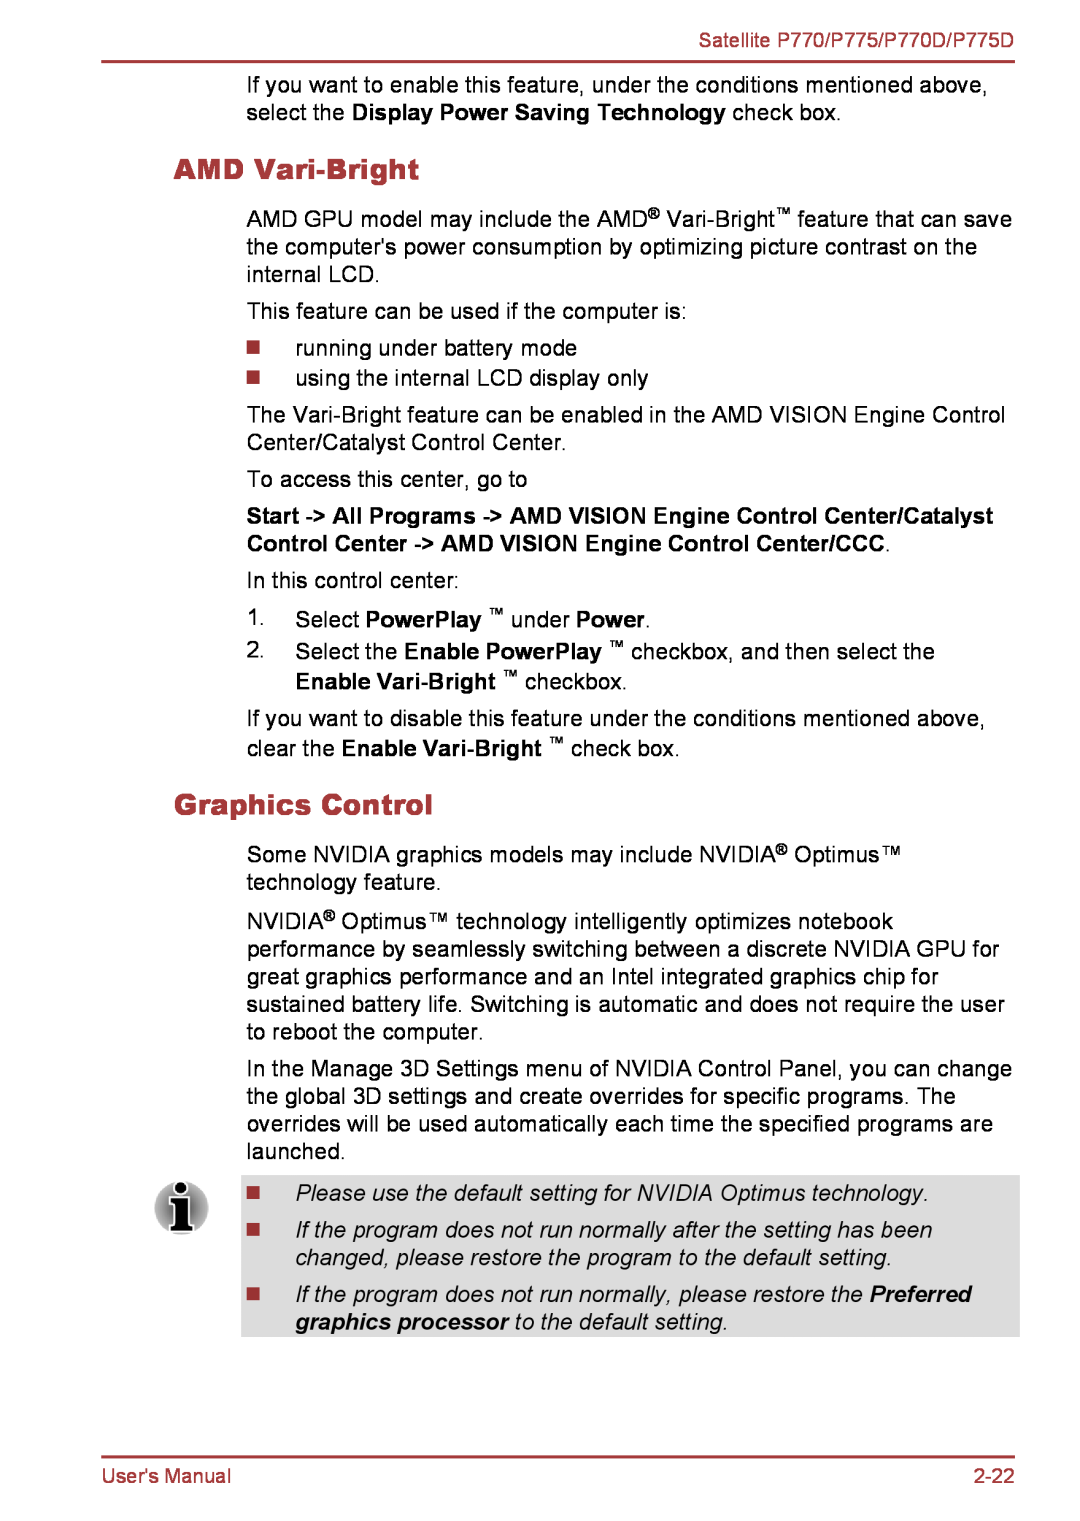 Toshiba P770 user manual AMD Vari-Bright, Graphics Control, Select PowerPlay under Power 